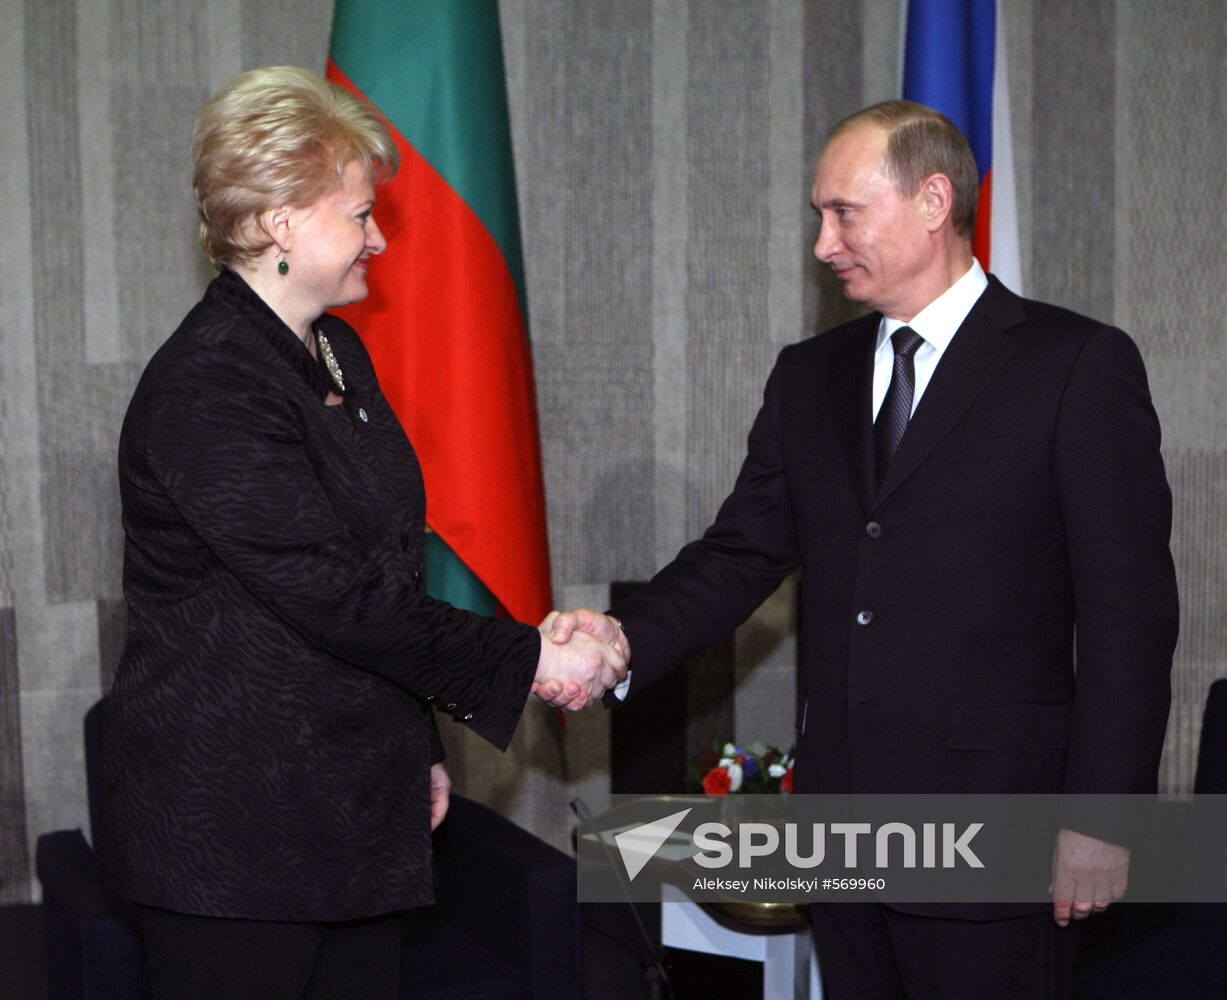 Vladimir Putin meets with Lithuanian president